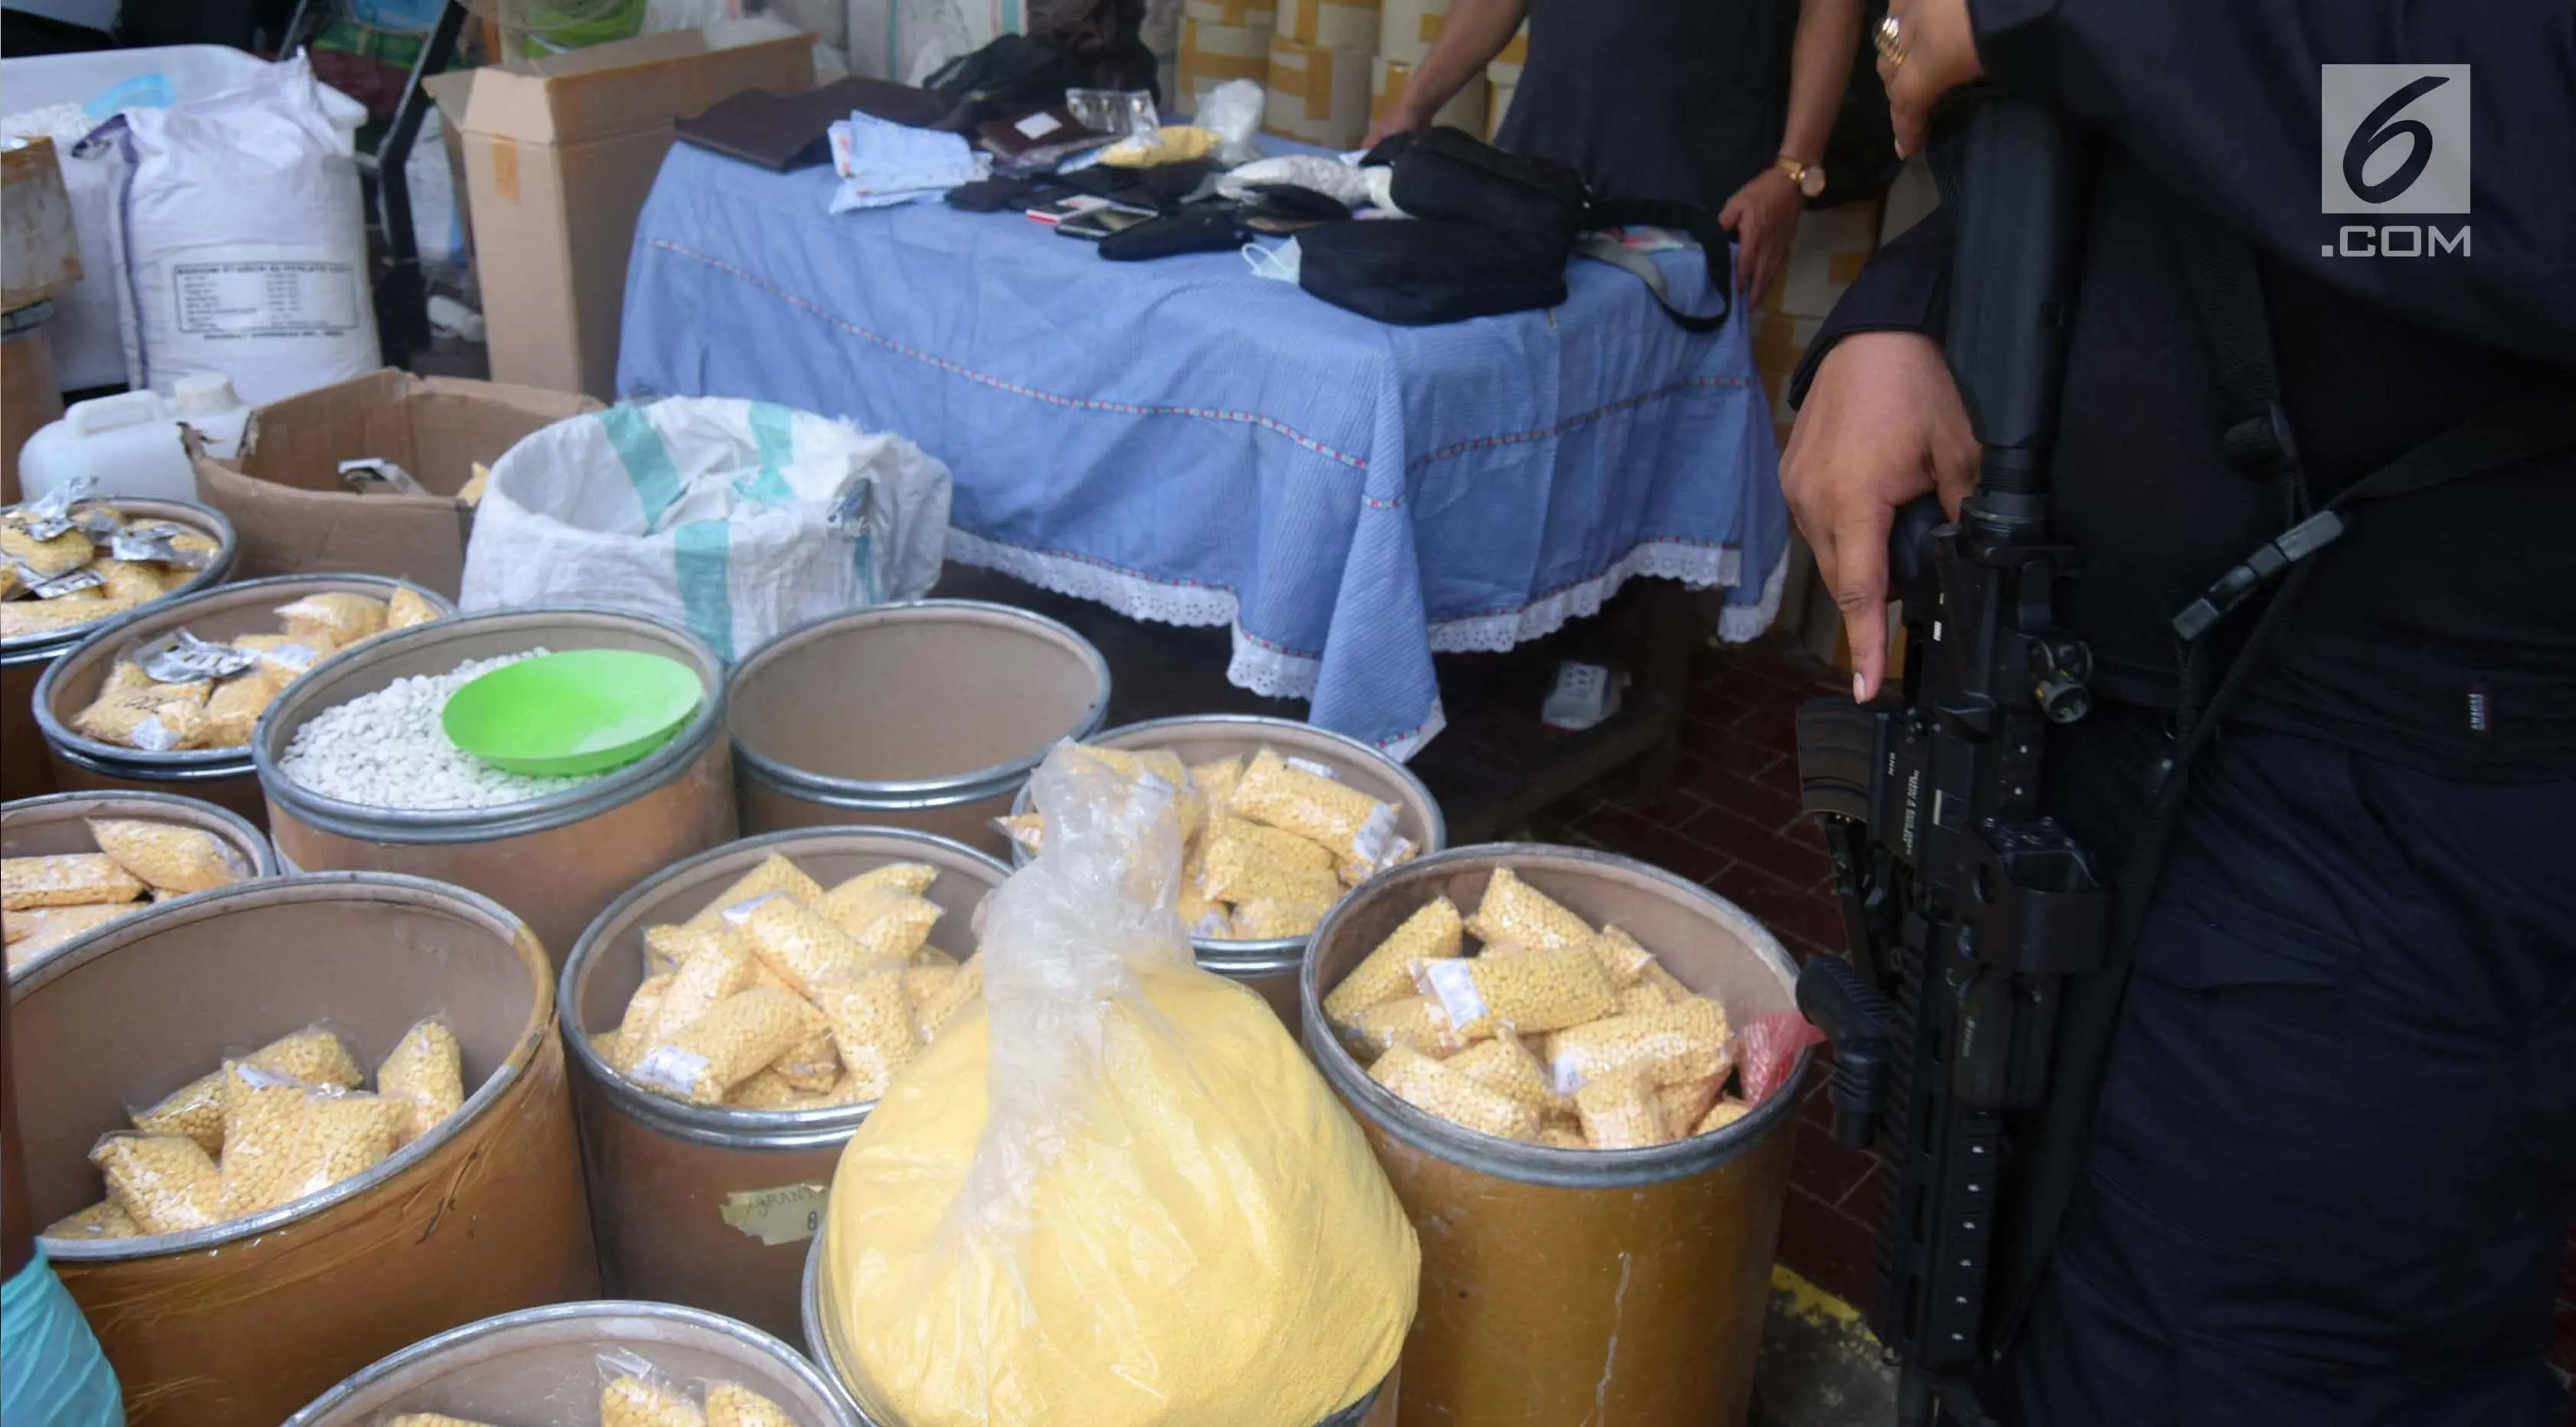 Barang bukti ditunjukkan saat pengungkapan kasus pabrik pil terlarang jenis Paracetamol Caffein Carisoprodol (PCC) di Semarang, Jawa Tengah, Senin (4/12). Selain meringkus dua tersangka utama, BNN menyita 13 juta butir pil PCC. (Liputan6.com/Gholib)